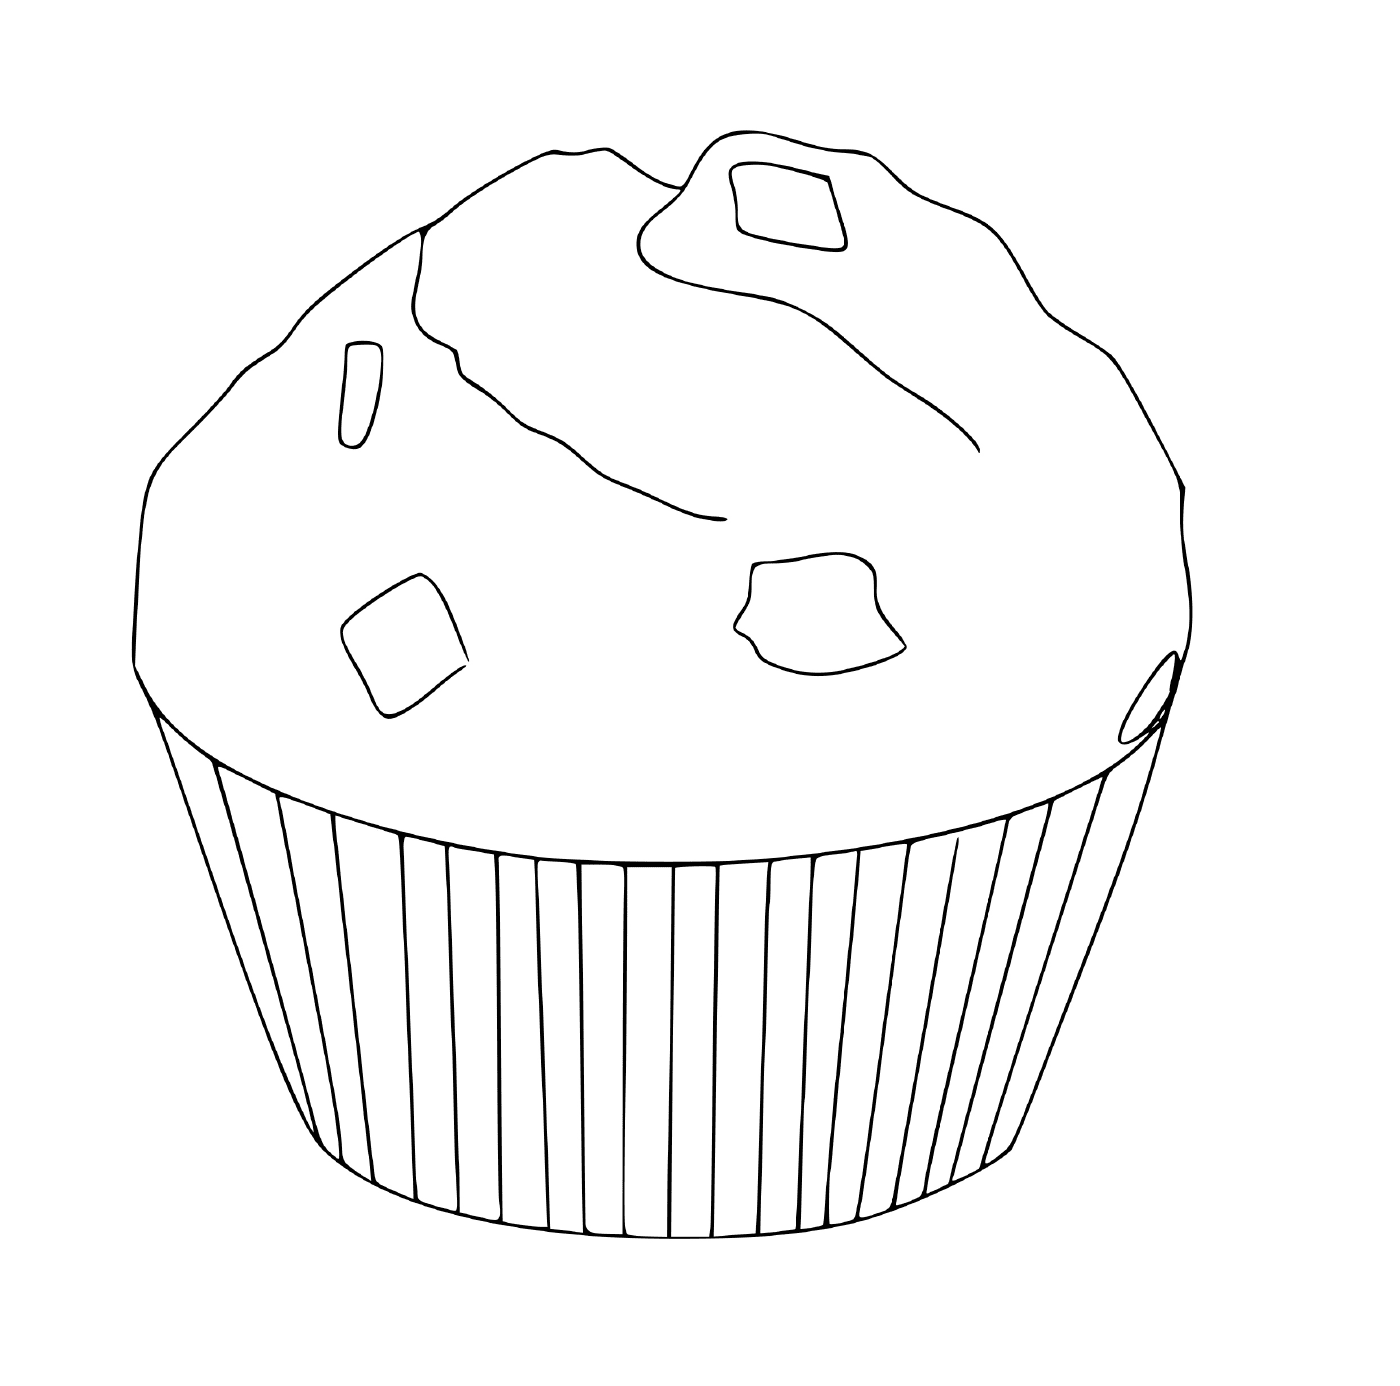  Delicious doce muffin 